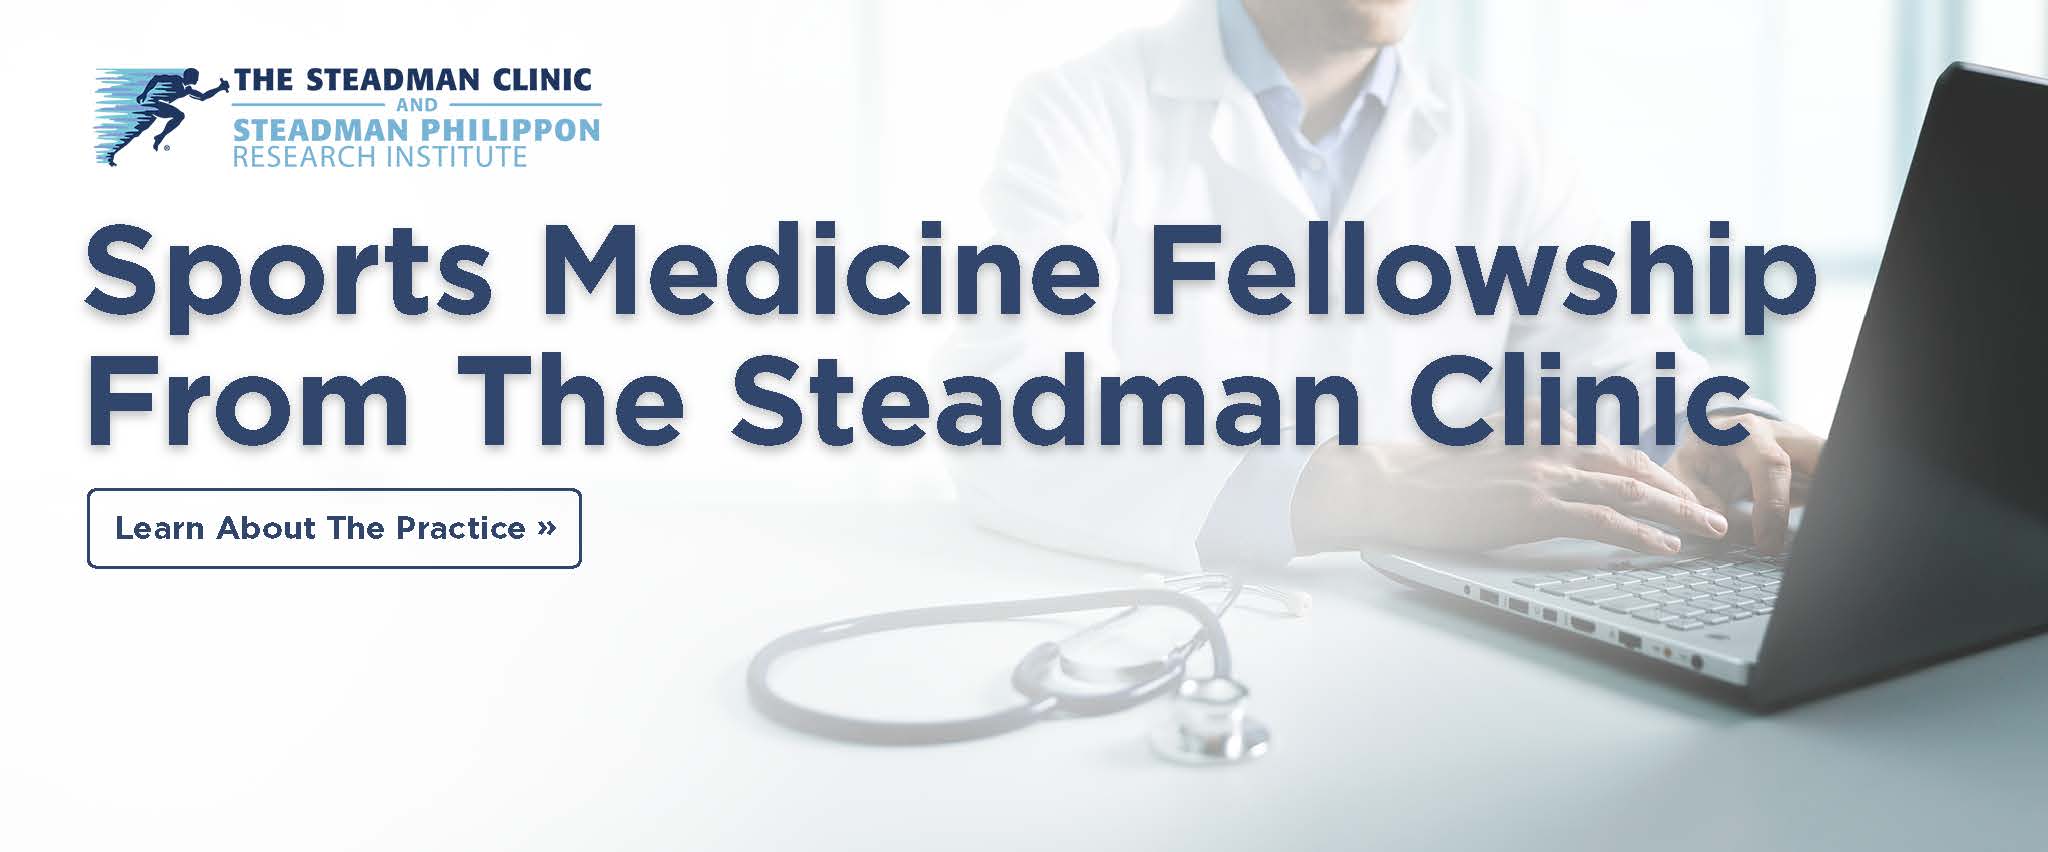 steadman clinic